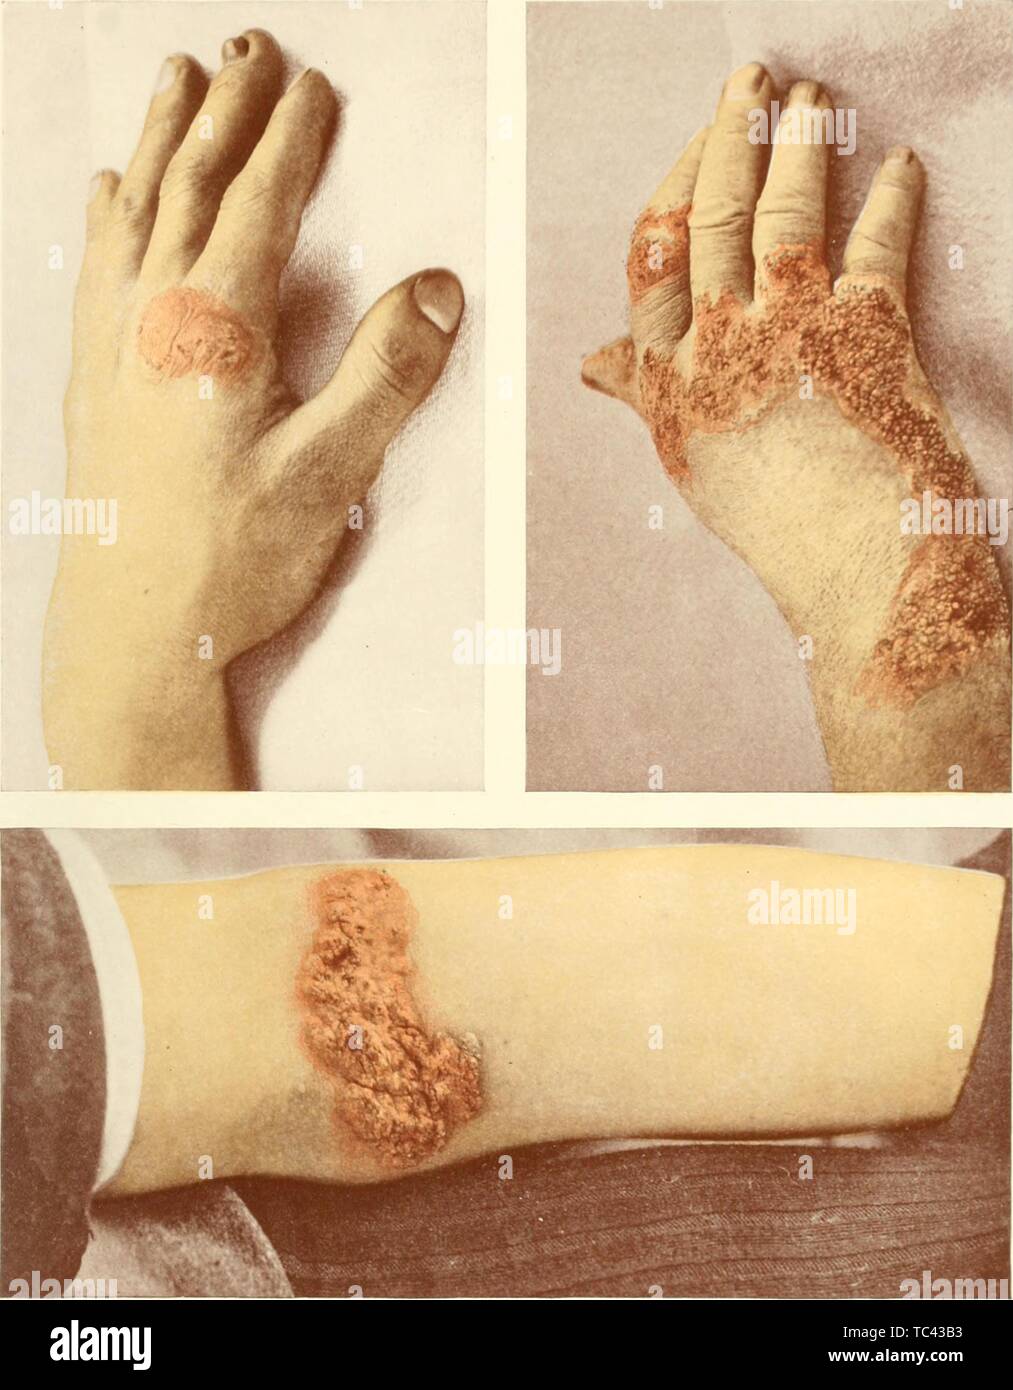 Grabados de manos humanas infectadas con tuberculosis verrucosa cutis